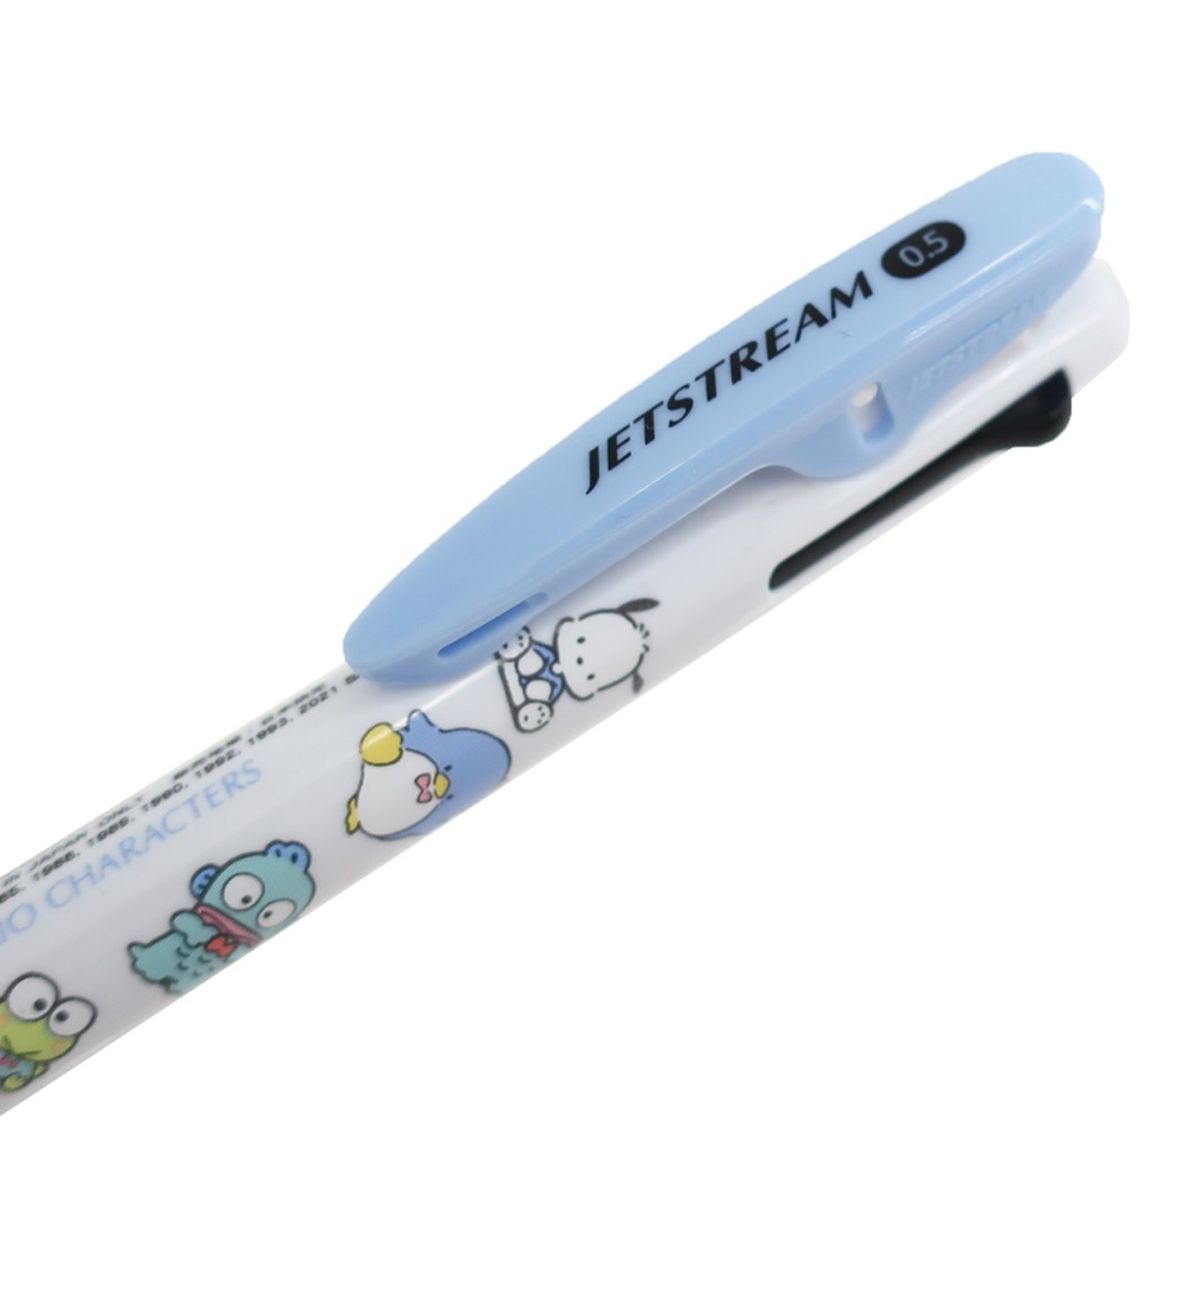 Sanrio Jetstream 0.5mm Pen [Characters]